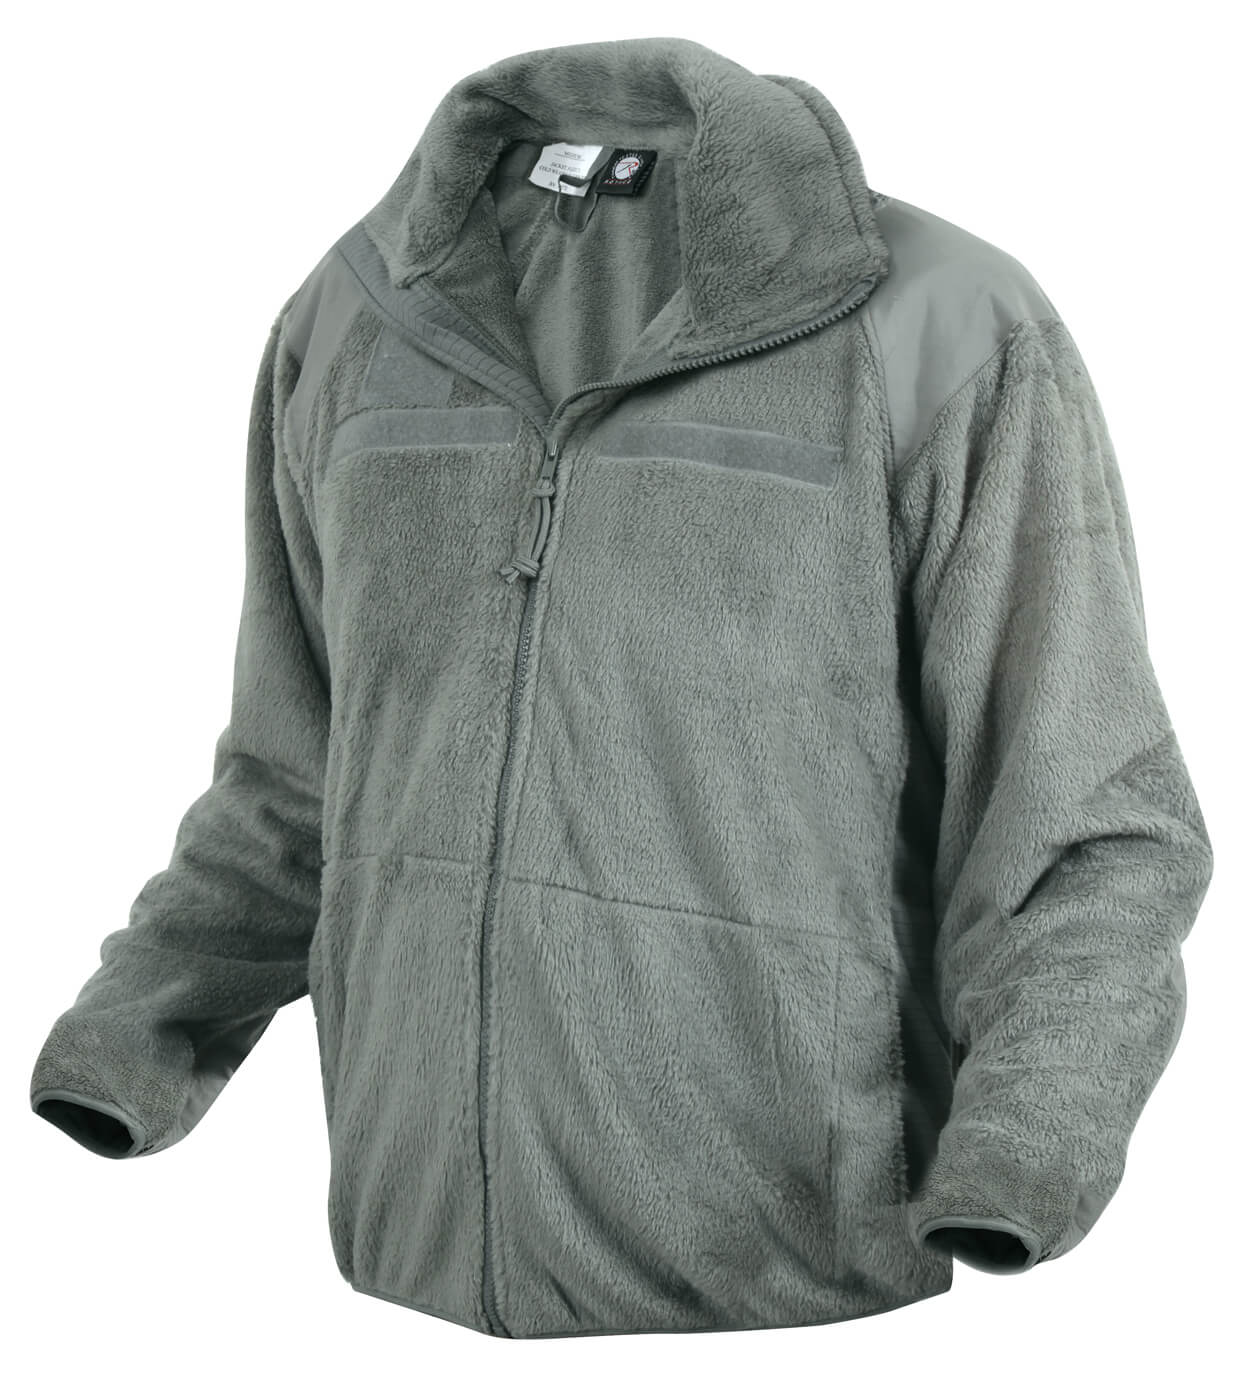 Rothco Level 3 Fleece Jacket, Foliage Green - Venture Surplus